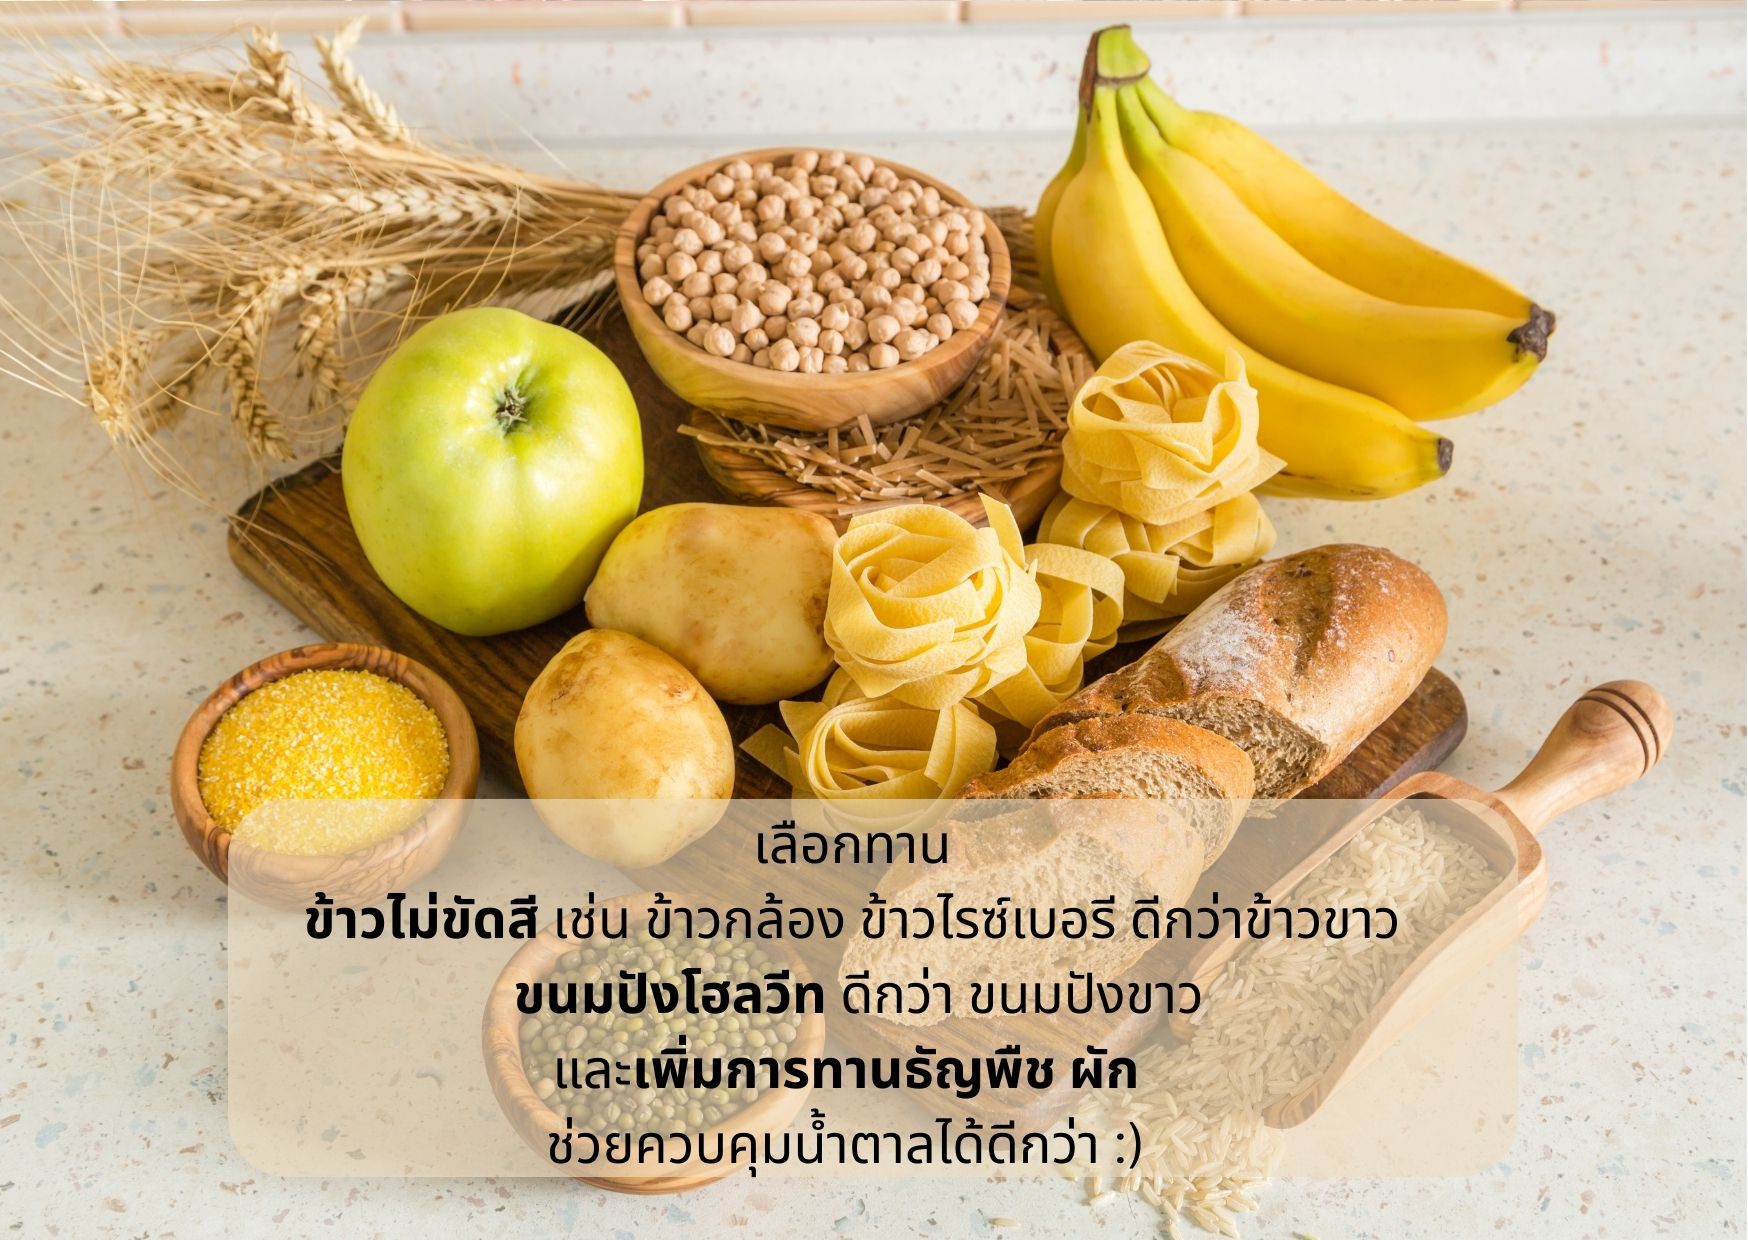 increase fiber and fruits